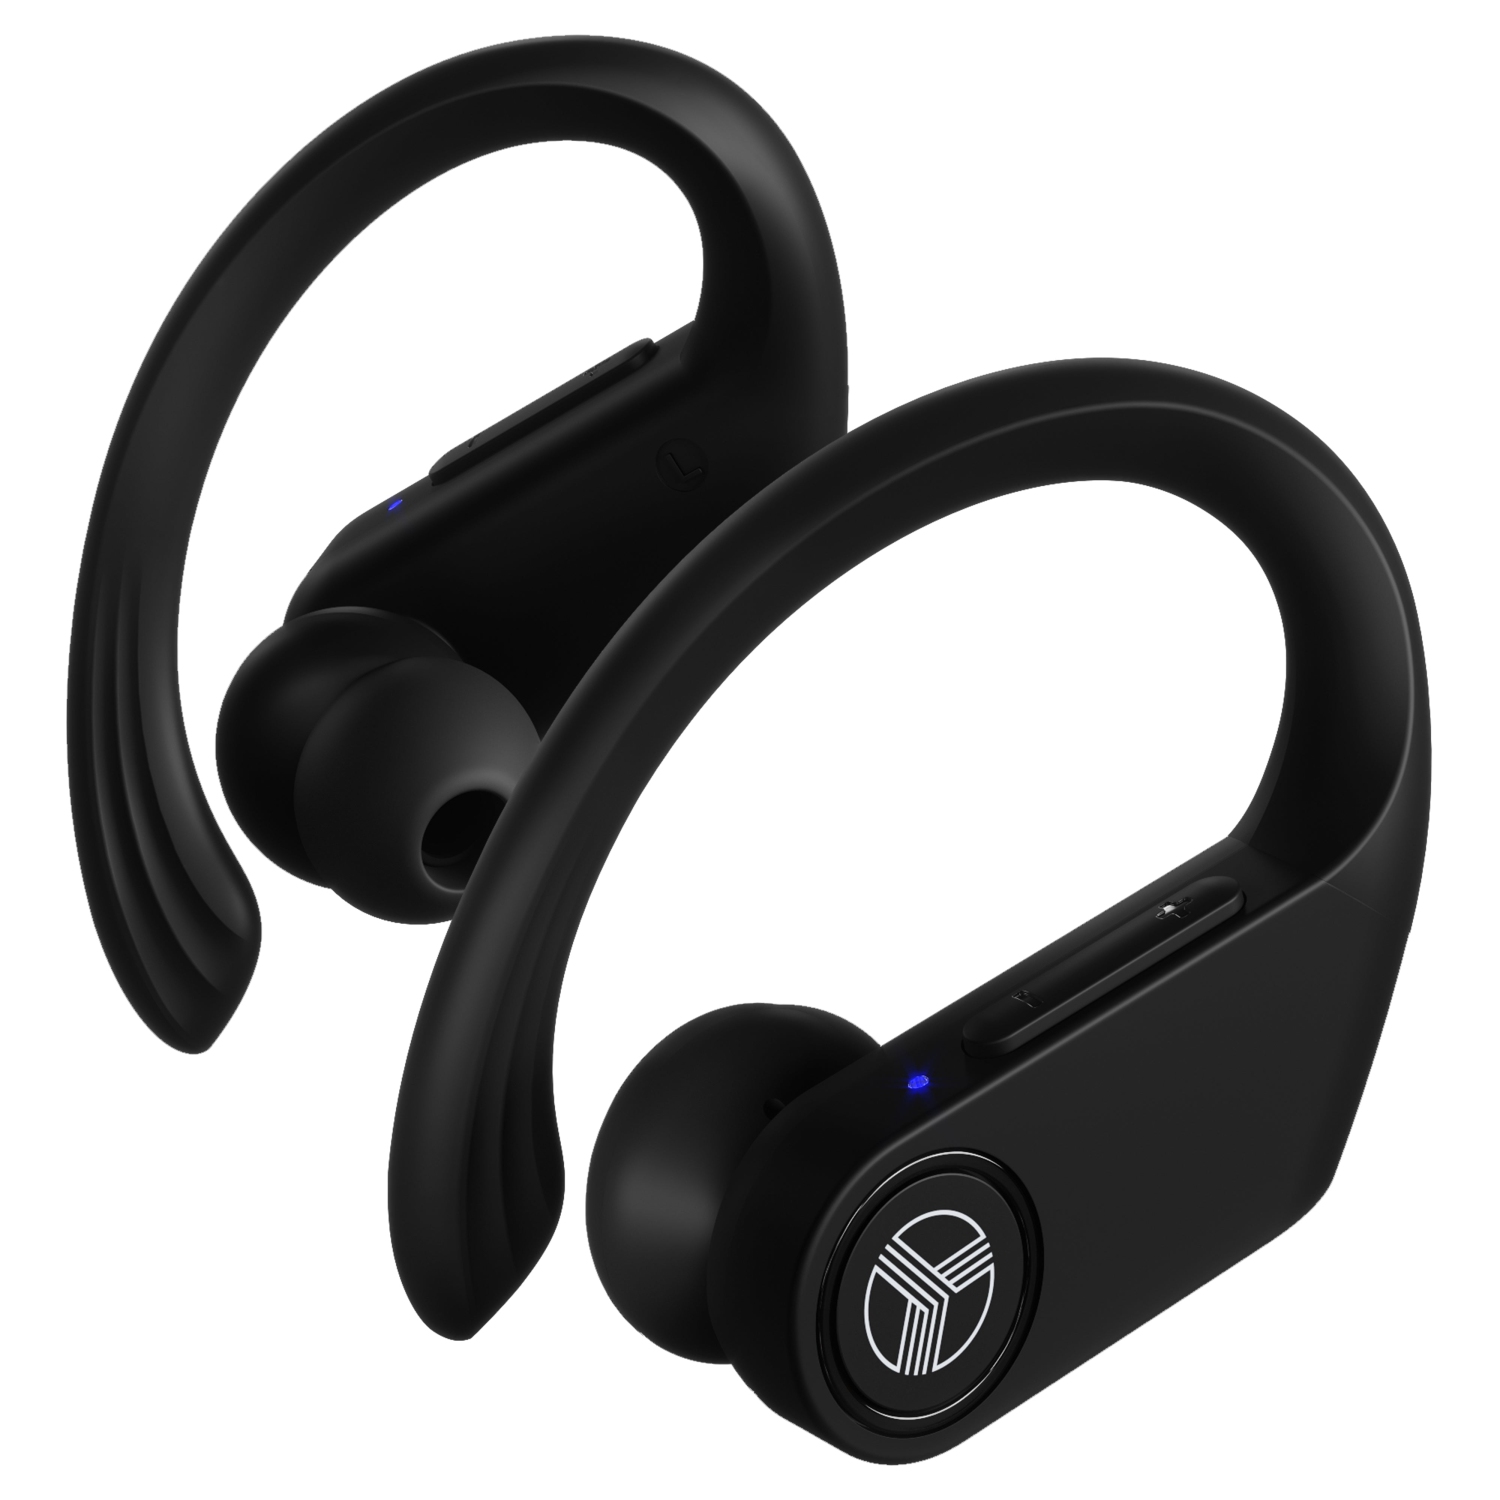 TREBLAB X3-Pro - Wireless Earbuds with Earhooks - 45H Playtime, aptX, IPX7 Waterproof Earphones - Sport Bluetooth Headphones with Charging case - Built-in Microphone - Black